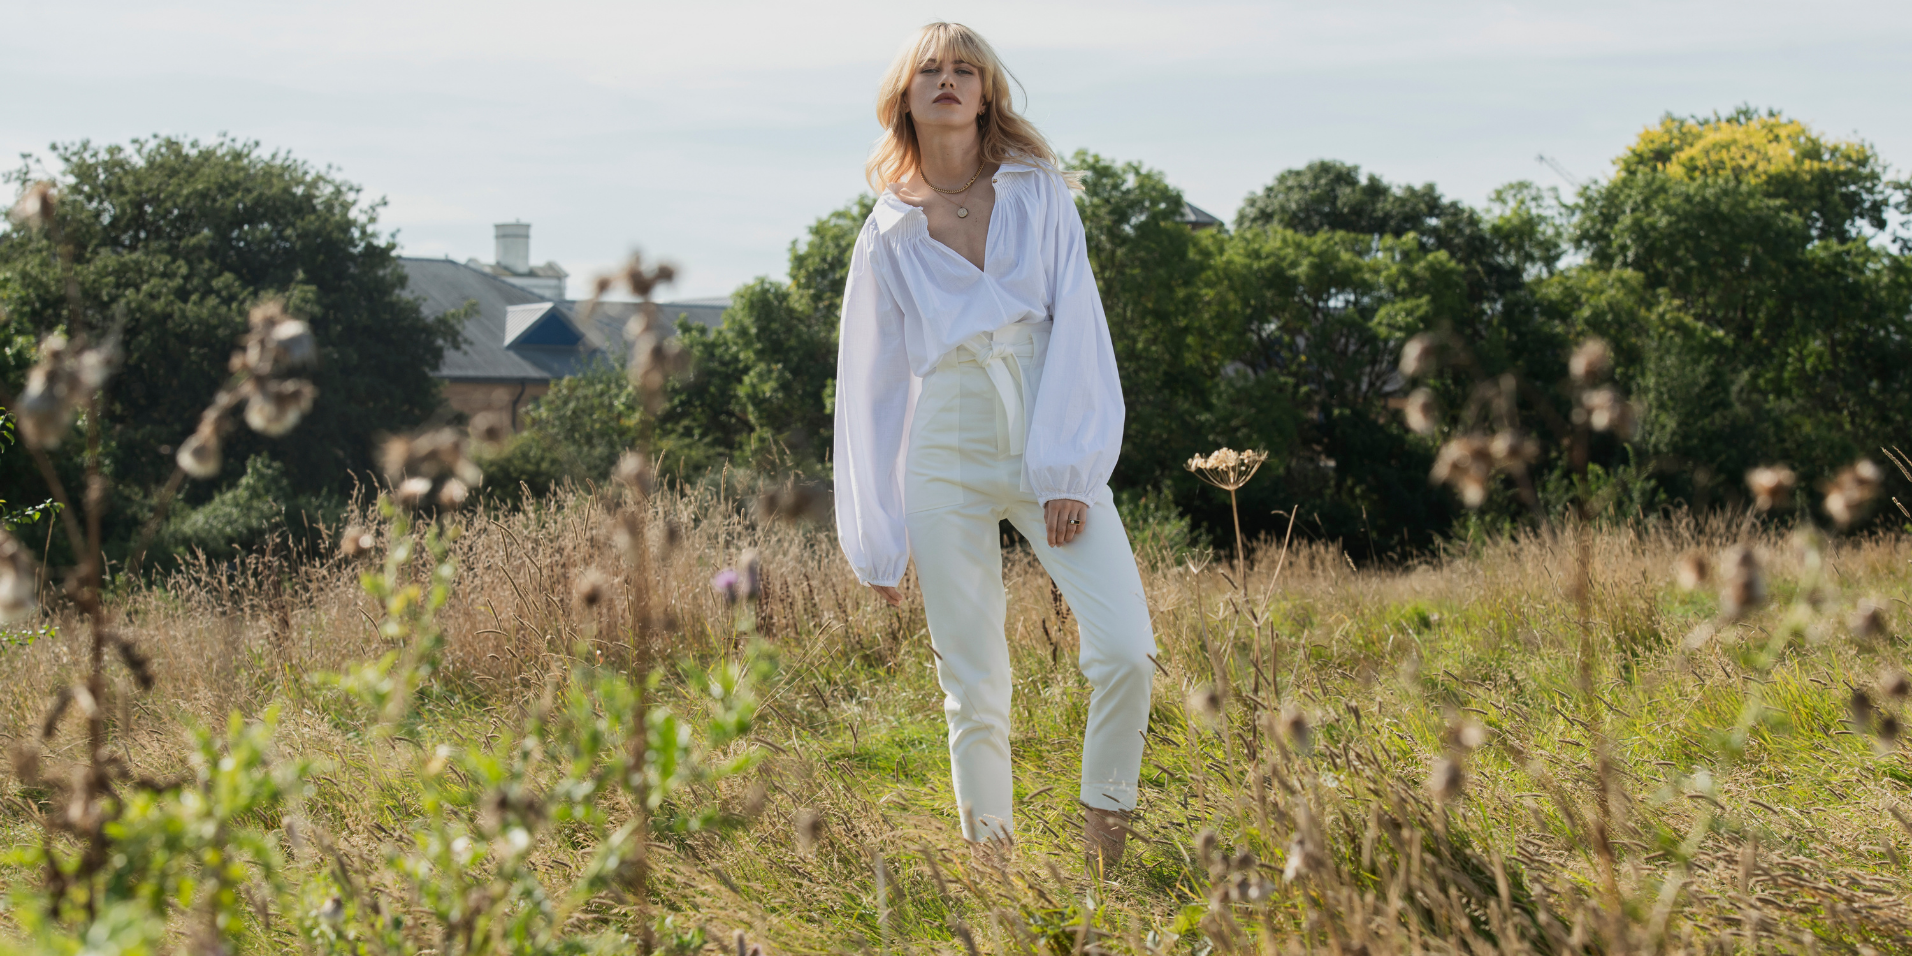 spring summer field womenswear white blouse skiim paris blond woman